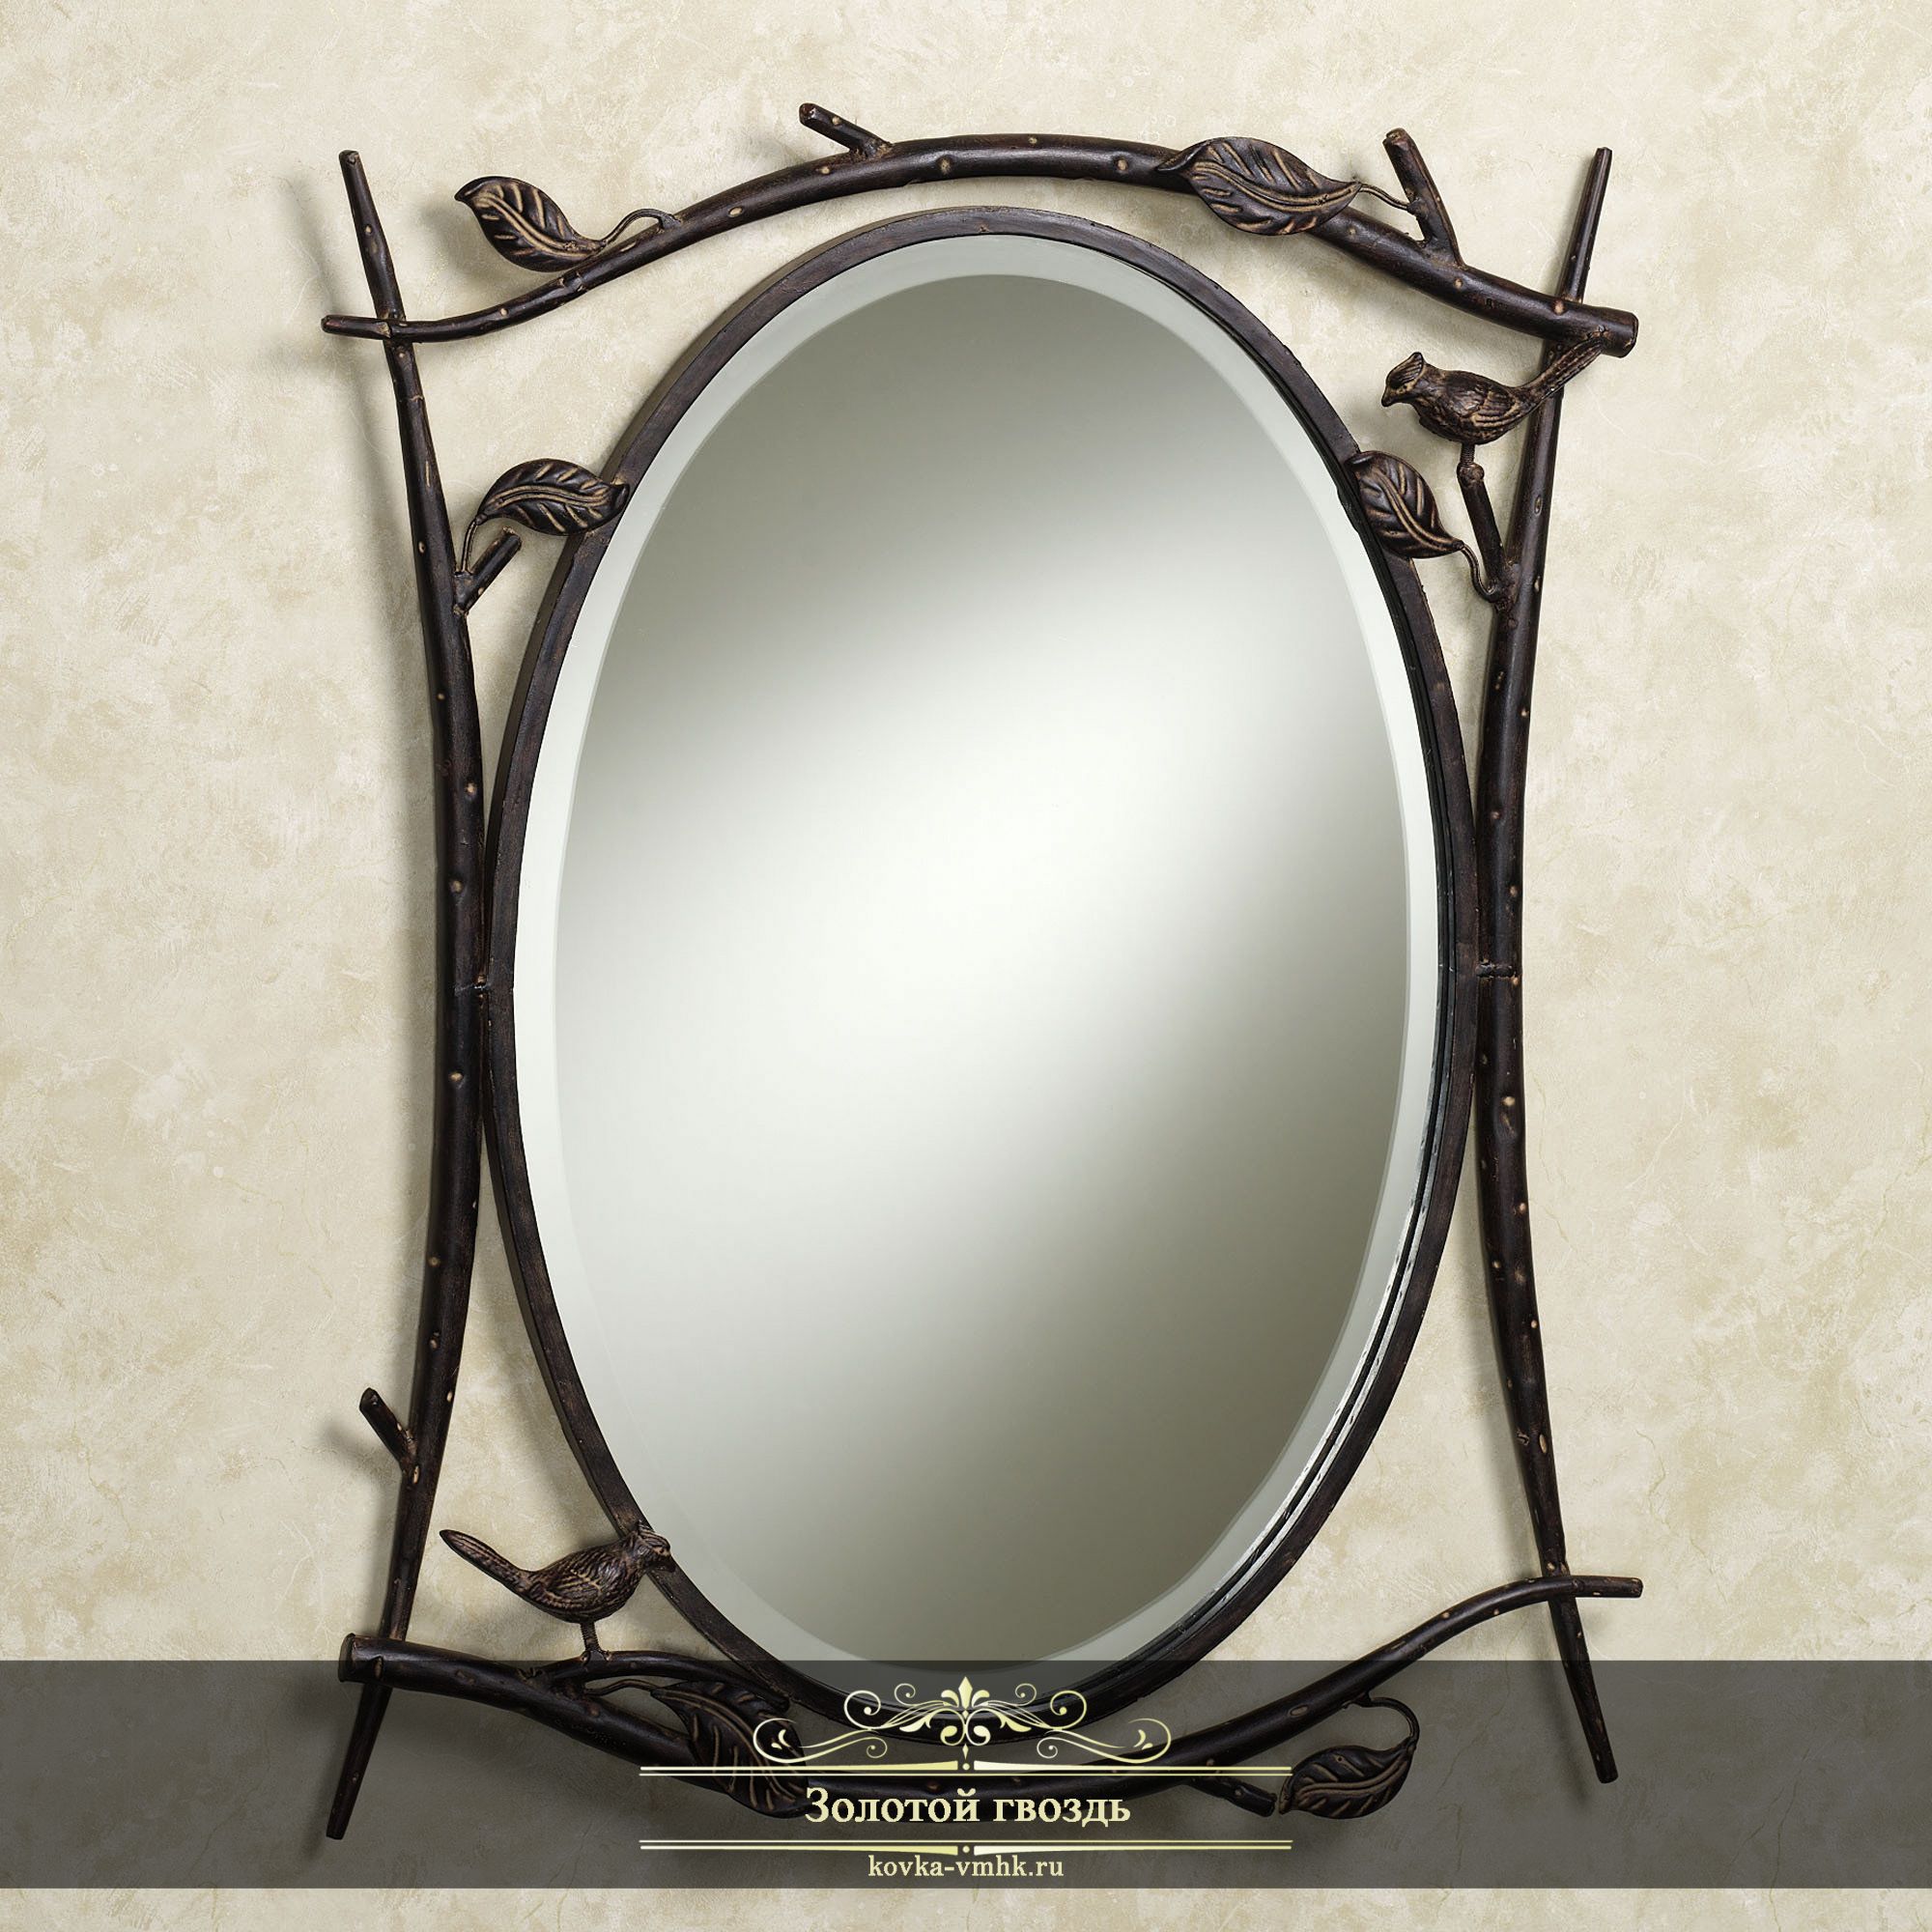 Купить зеркало метр. Кованое зеркало. Зеркало в металлической оправе. Зеркала в металлических рамах. Зеркало в металлической раме.